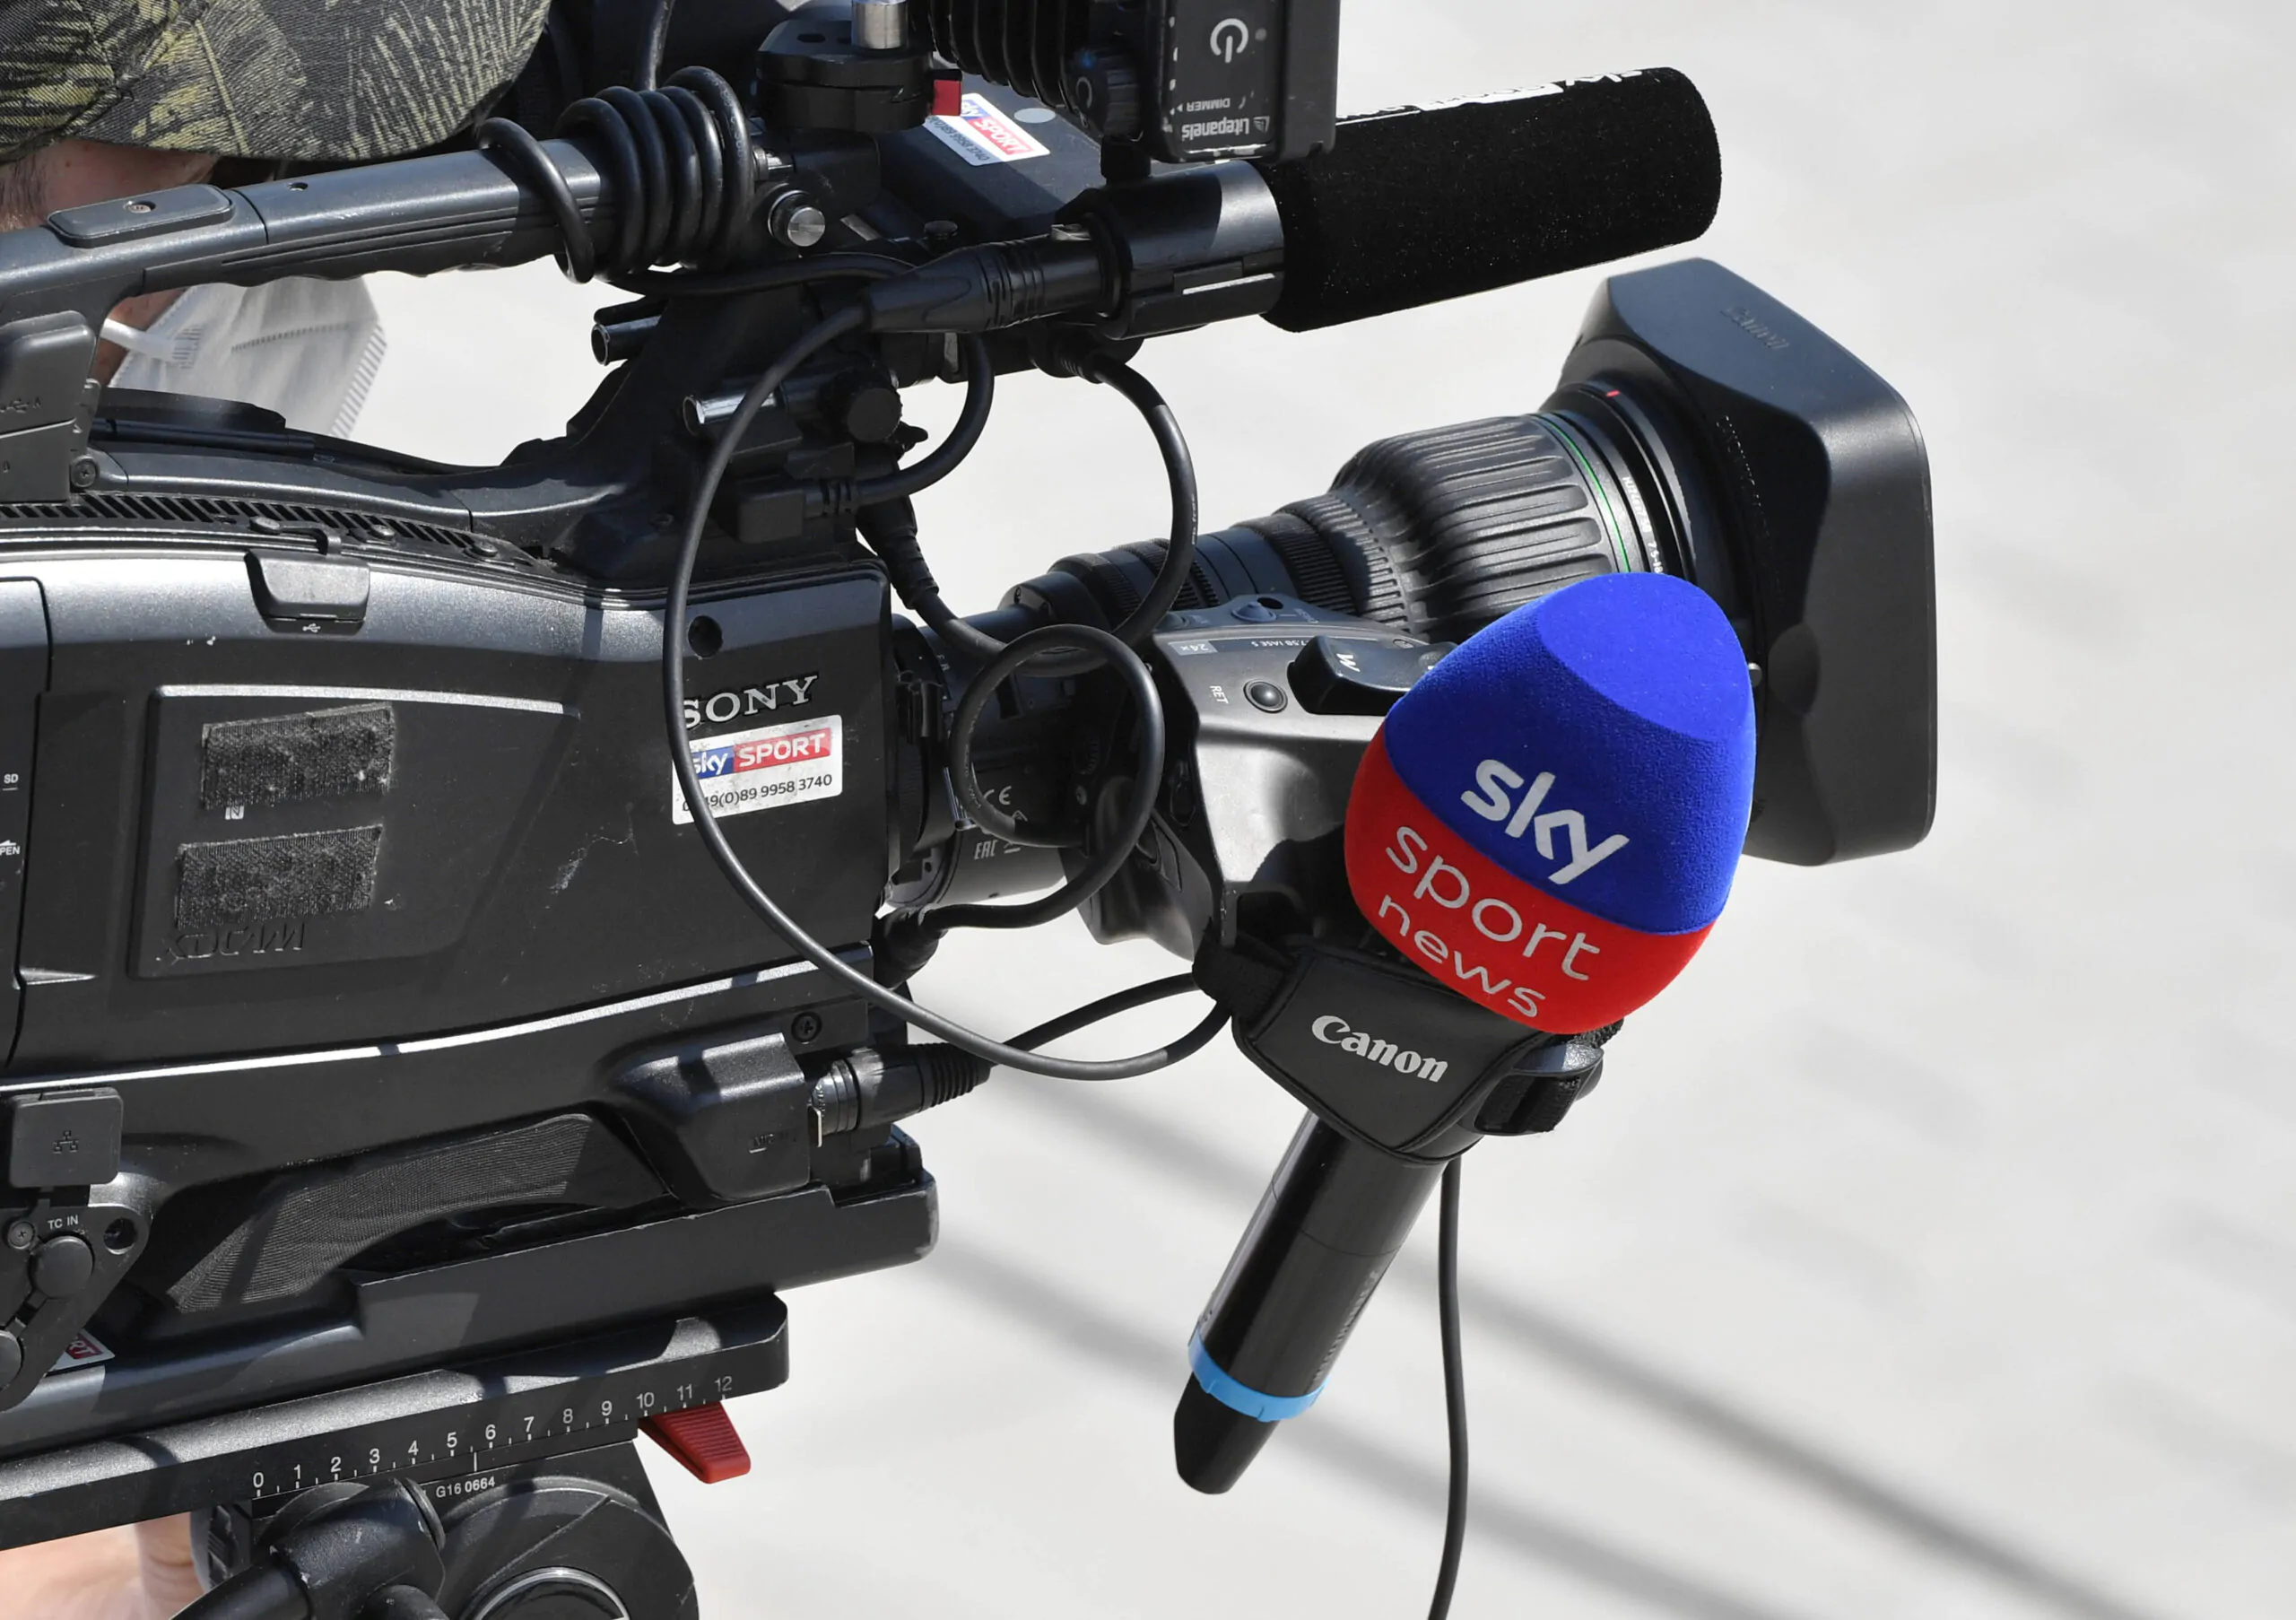 Trevisani lascia Sky per Mediaset! Le parole del telecronista